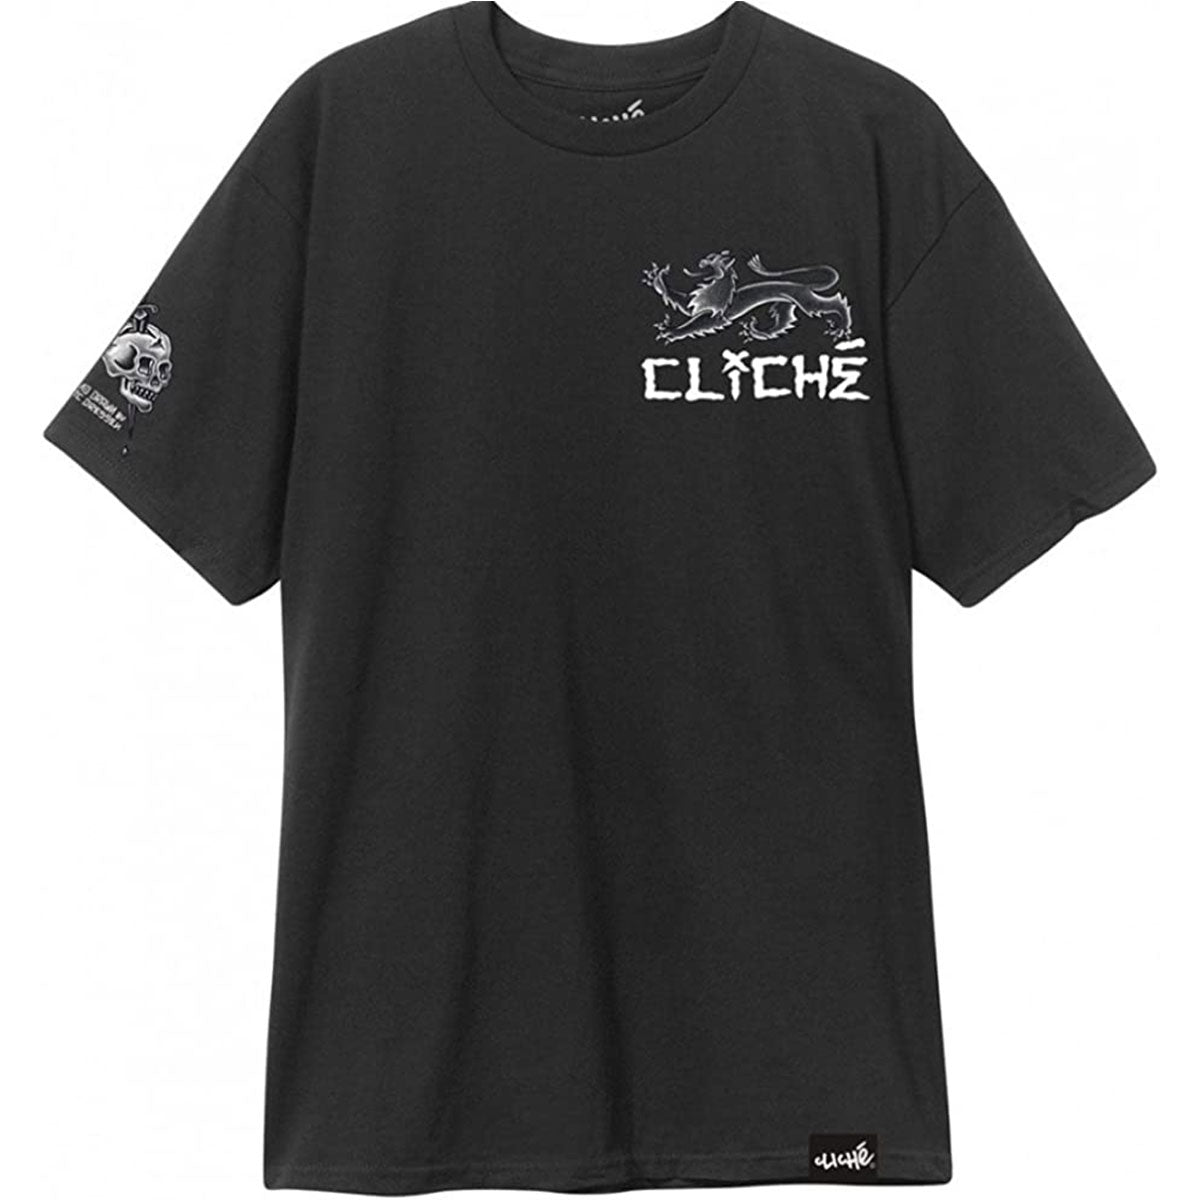 Cliche Dressen Lyon Men's Short-Sleeve Shirts-20026114